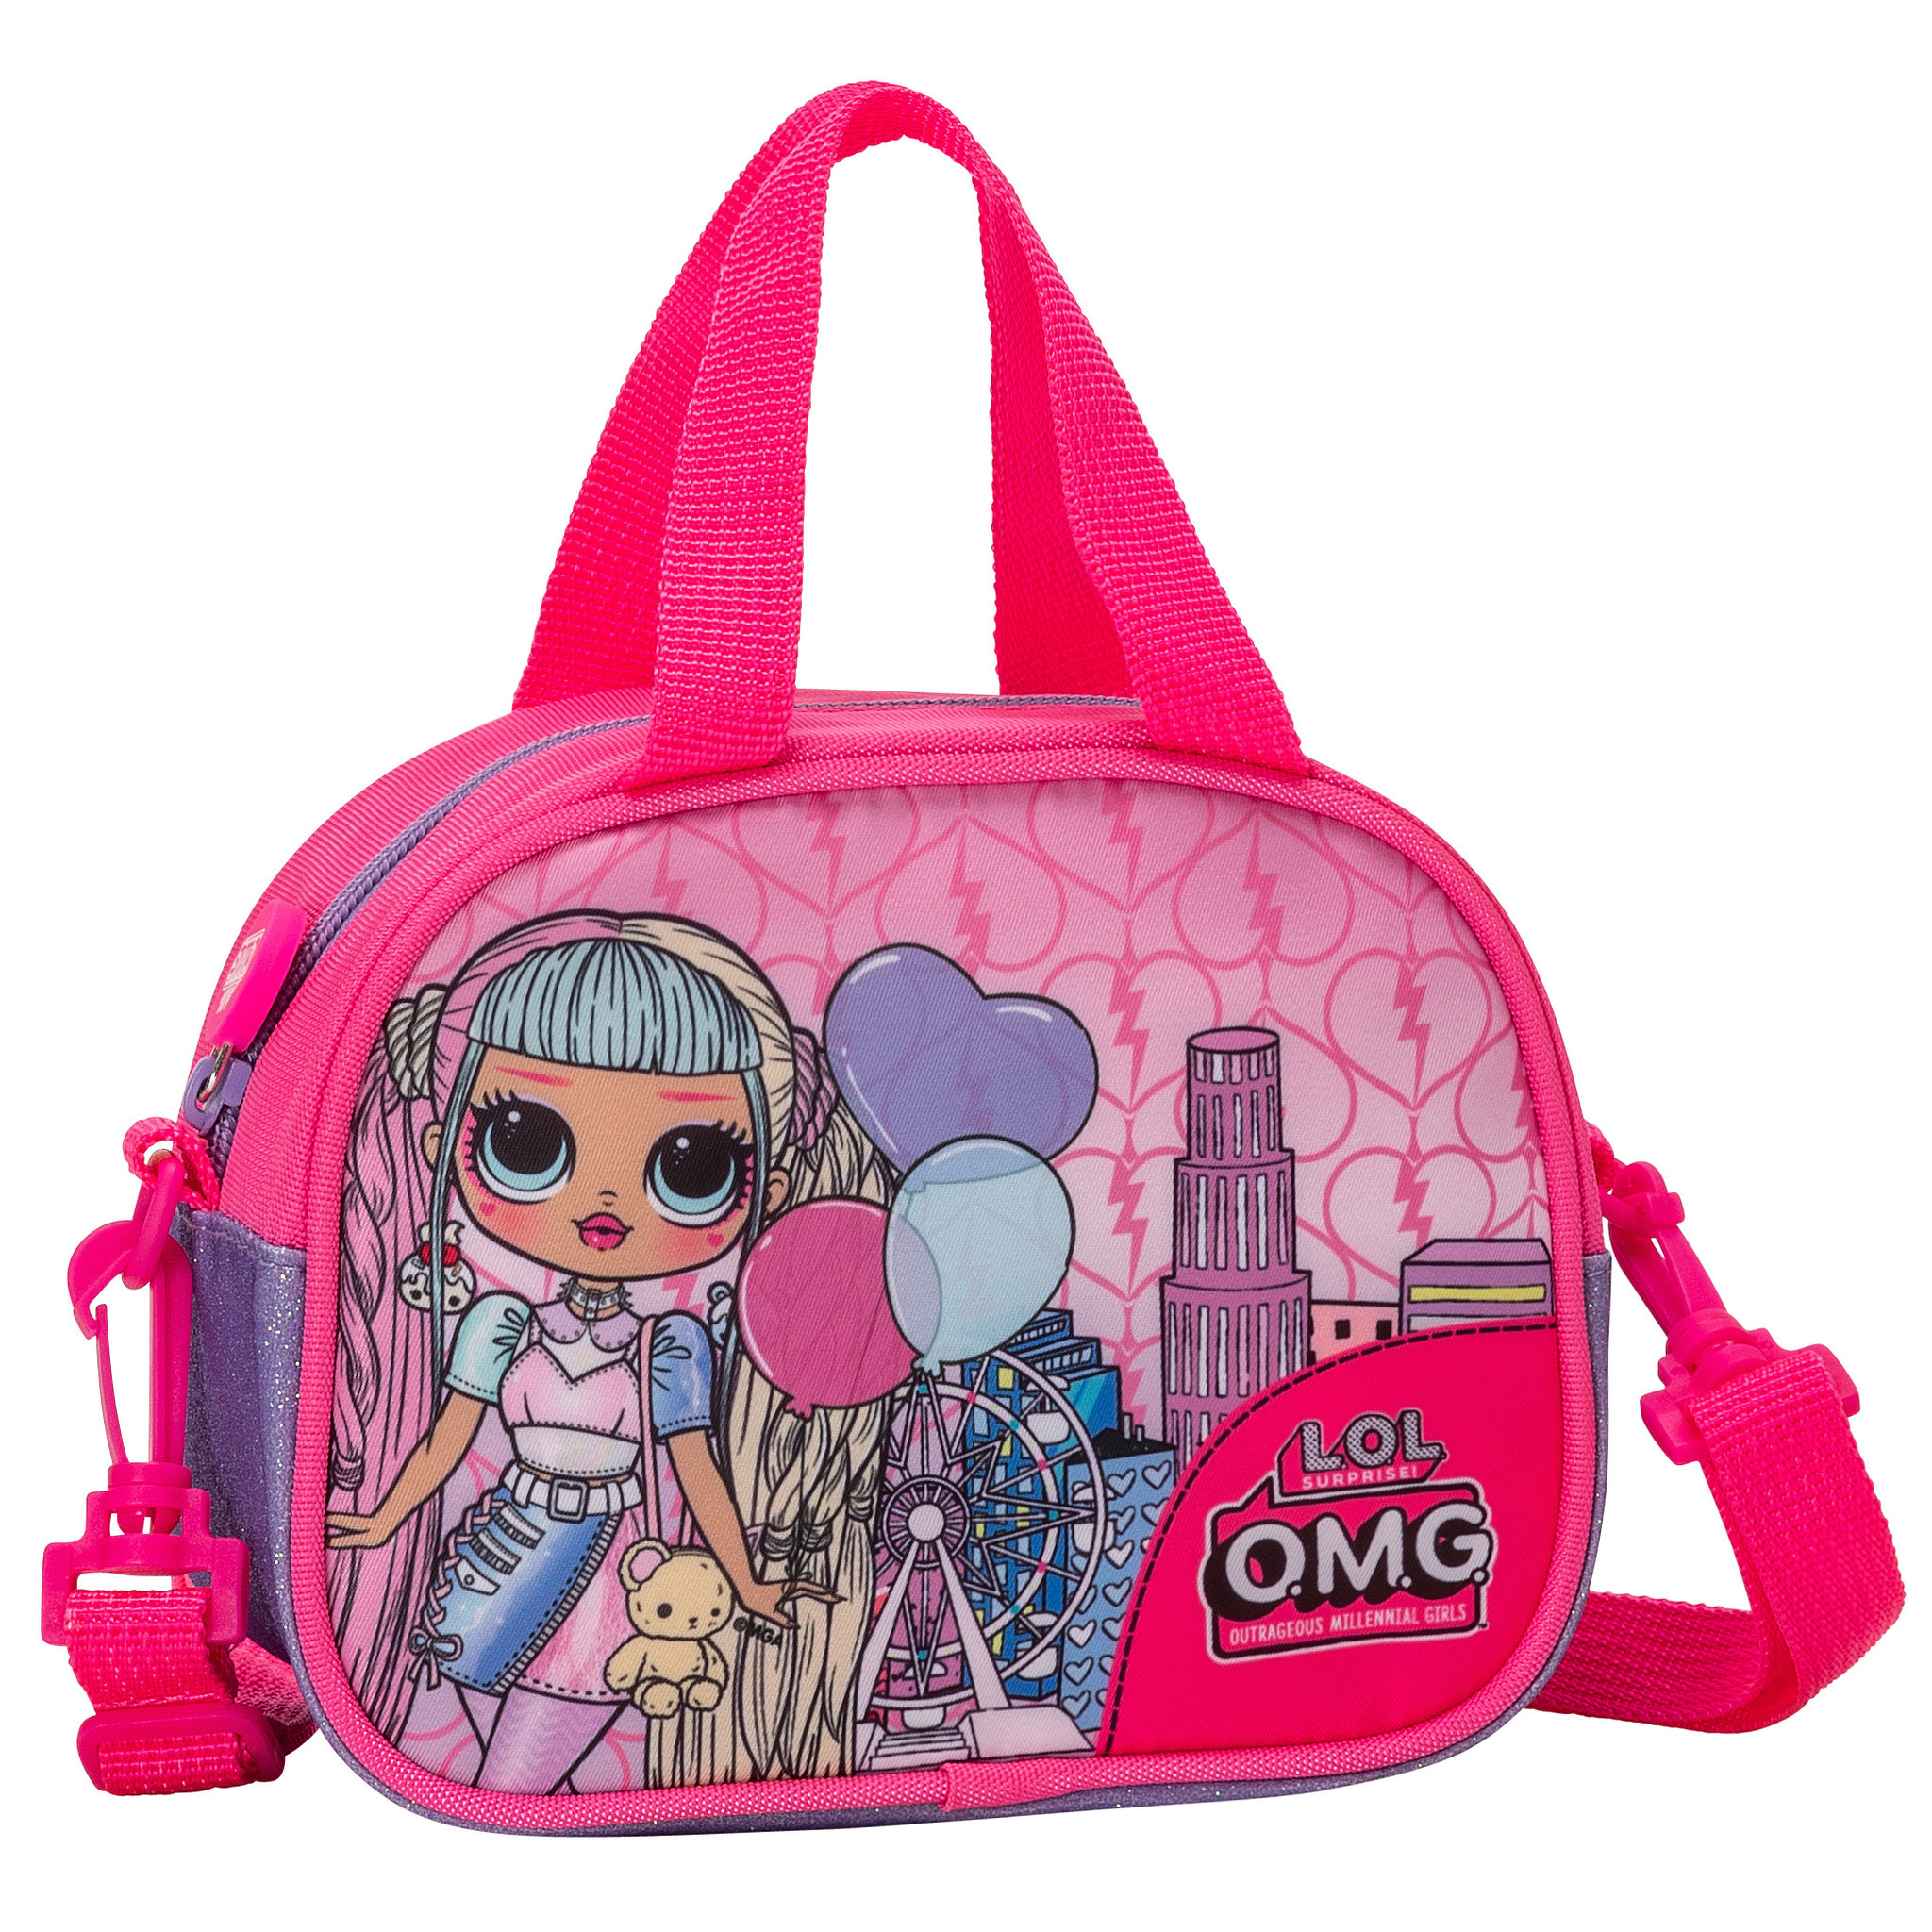 L.O.L. Surprise Handbag Outrageous Millennial Girls - 18 x 15 x 6 cm - Polyester